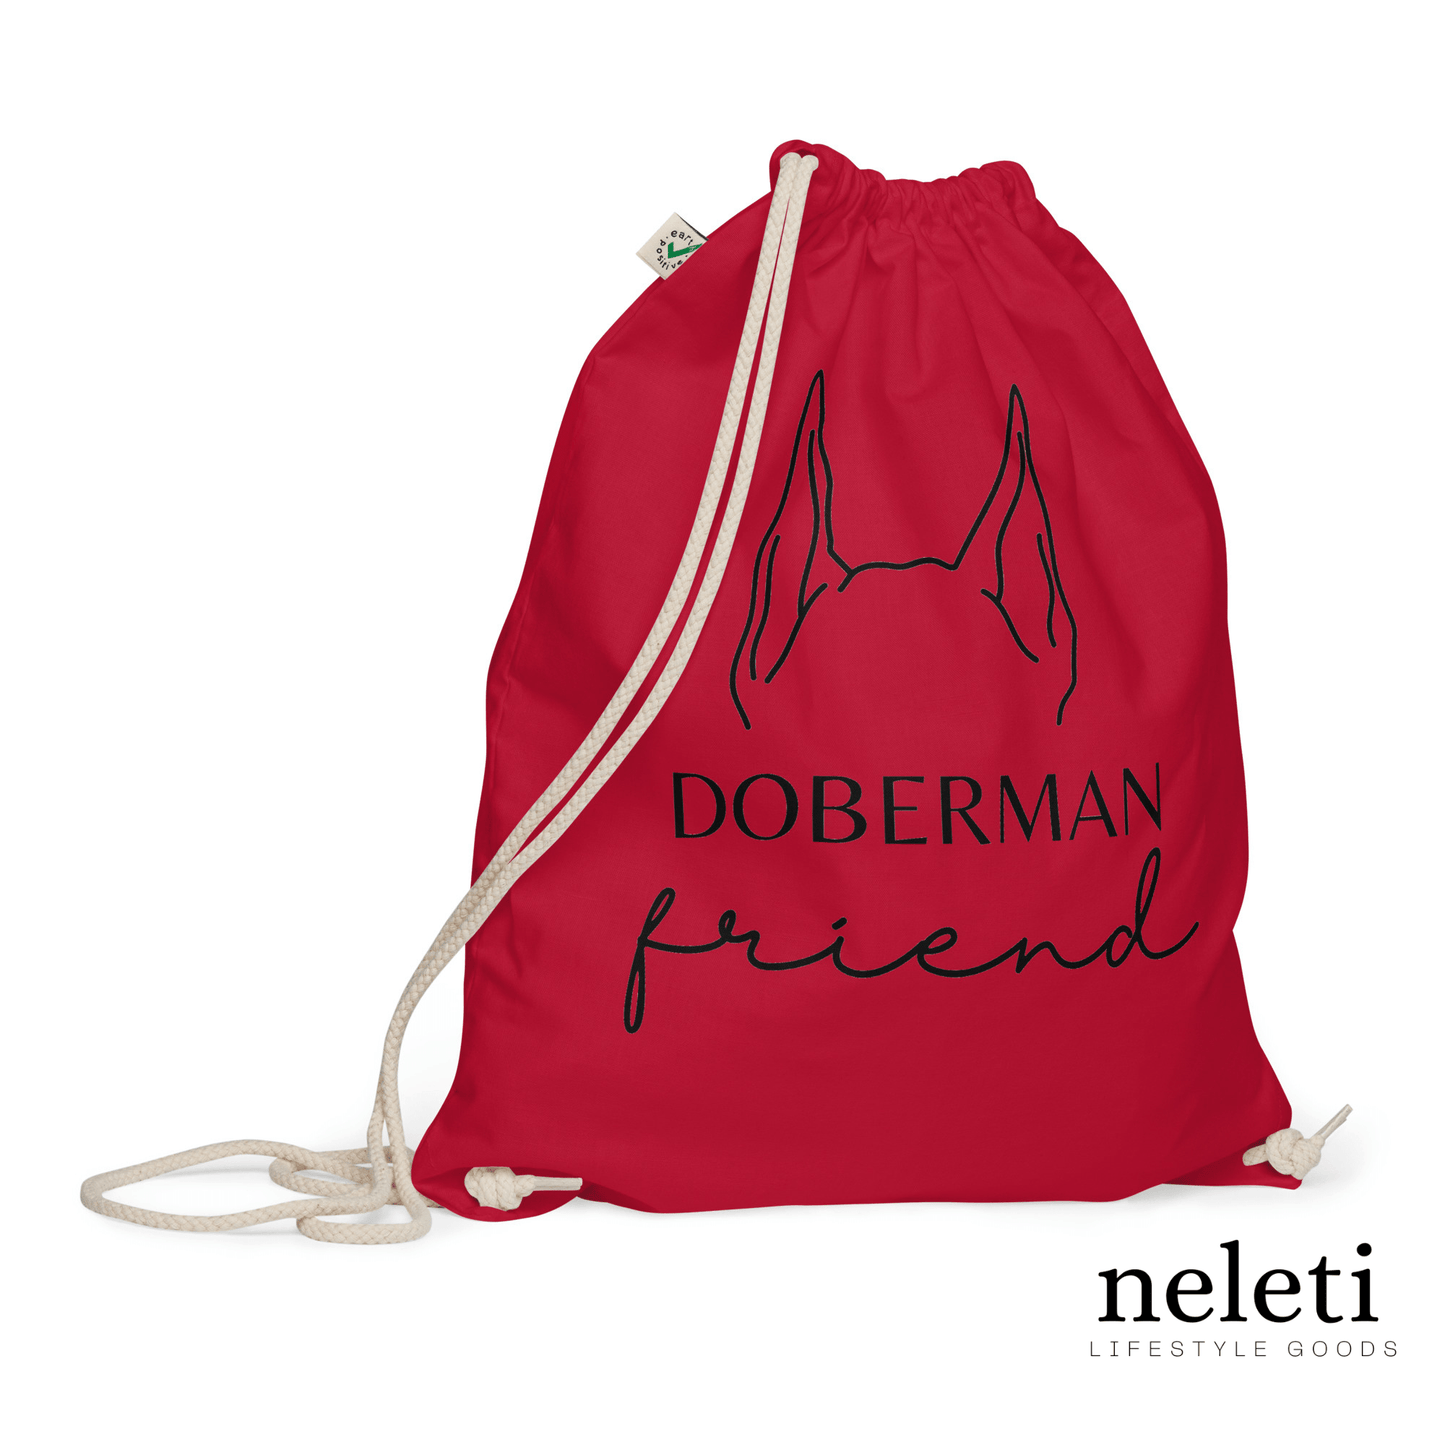 neleti.com-Dog-Ears-on-Red-Organic-Cotton-Drawstring-Bag